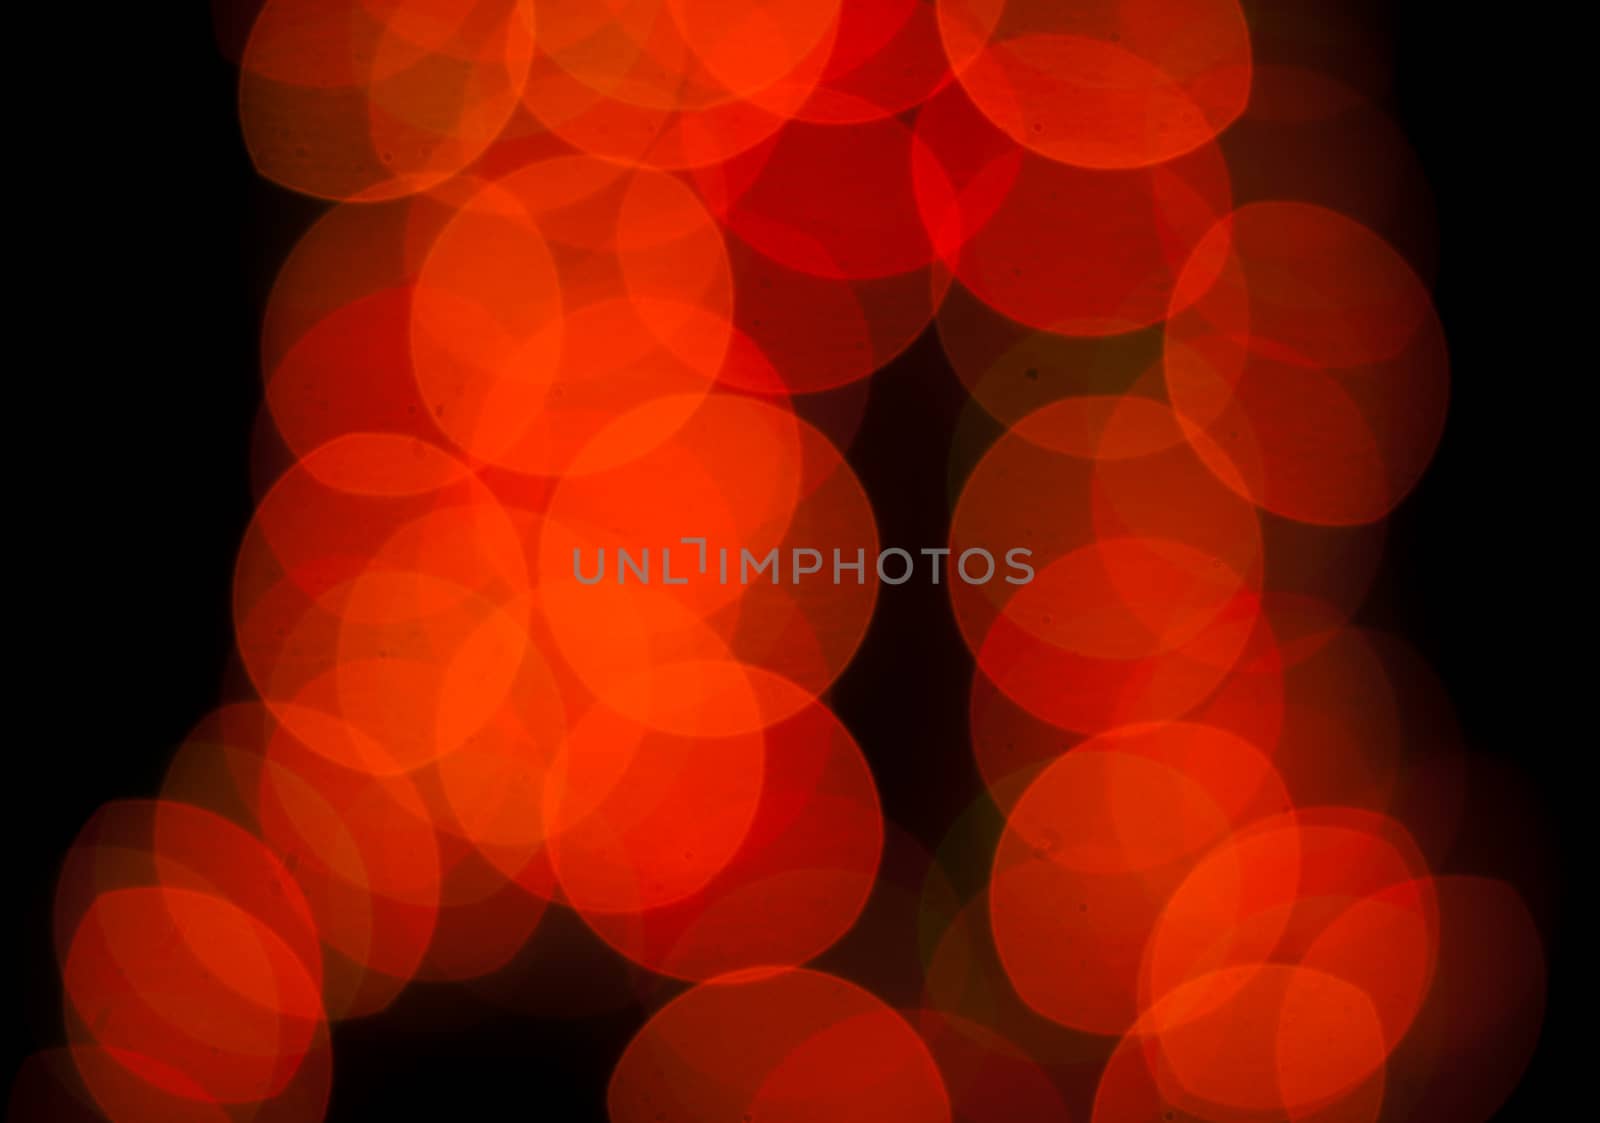 Background of defocused lights, or bokeh by serhii_lohvyniuk